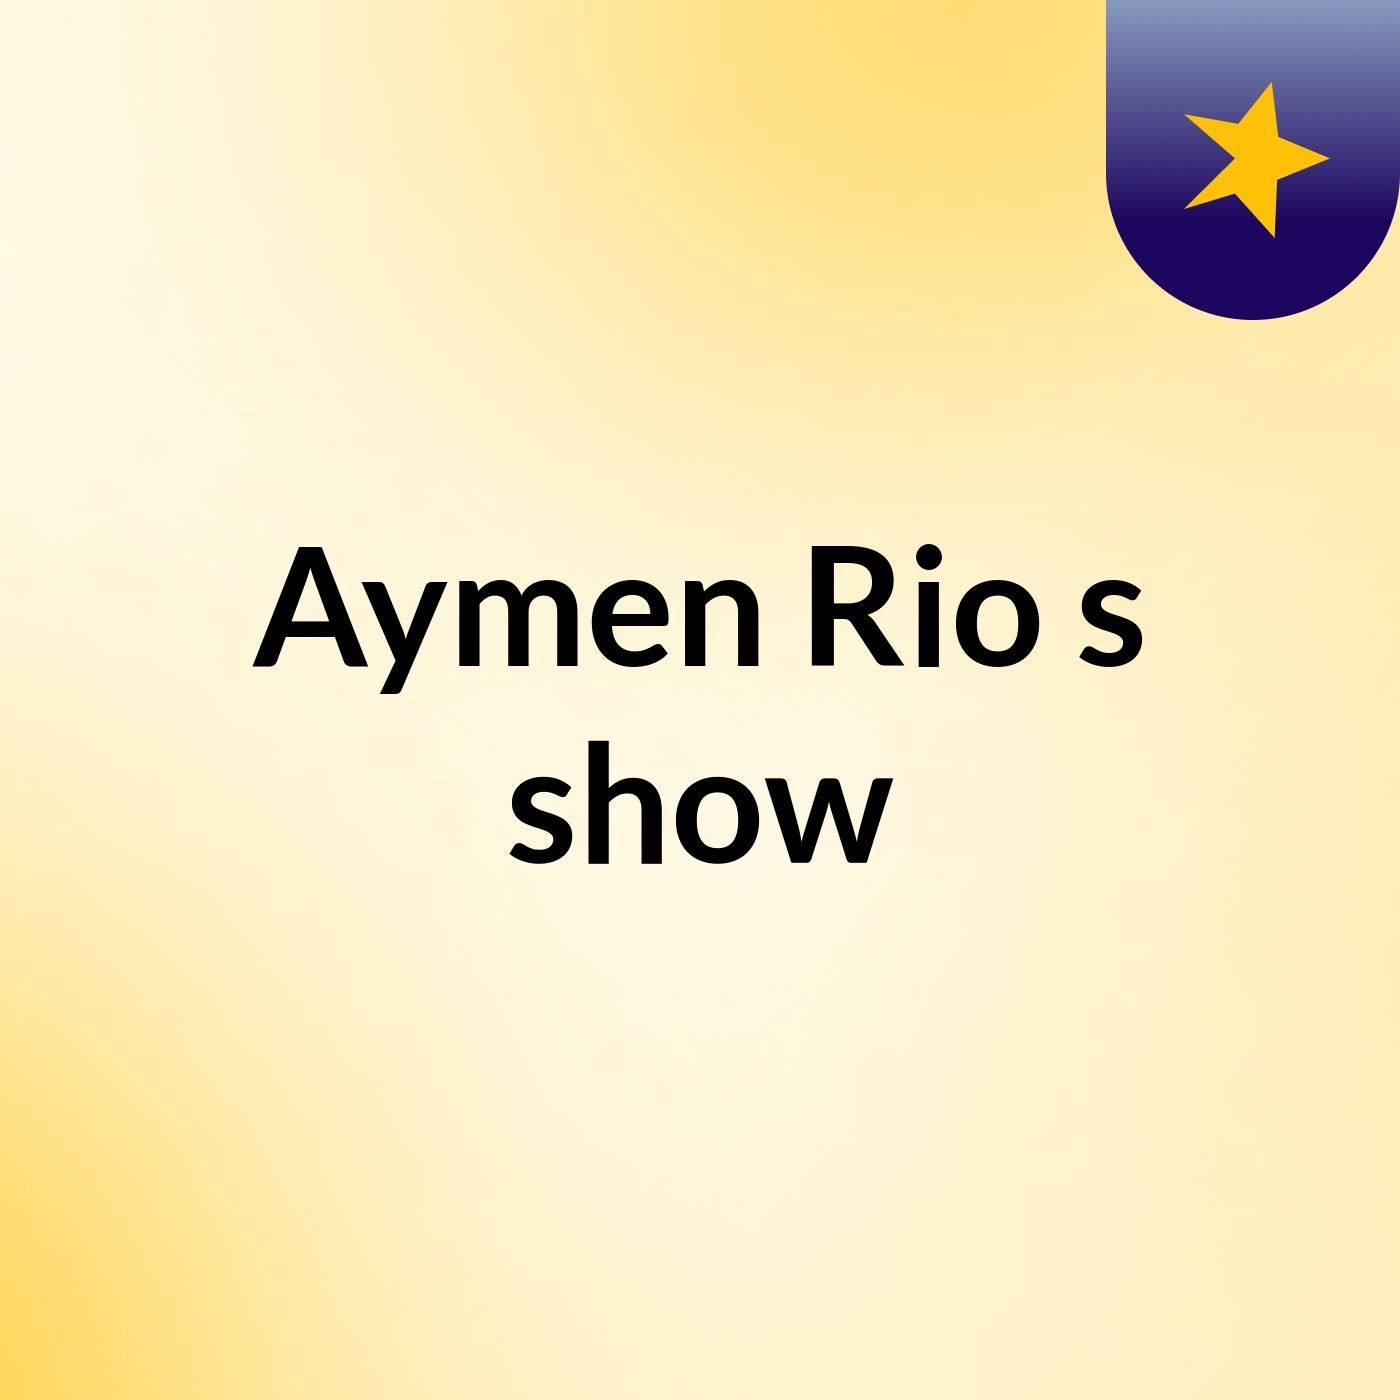 Aymen Rio's show